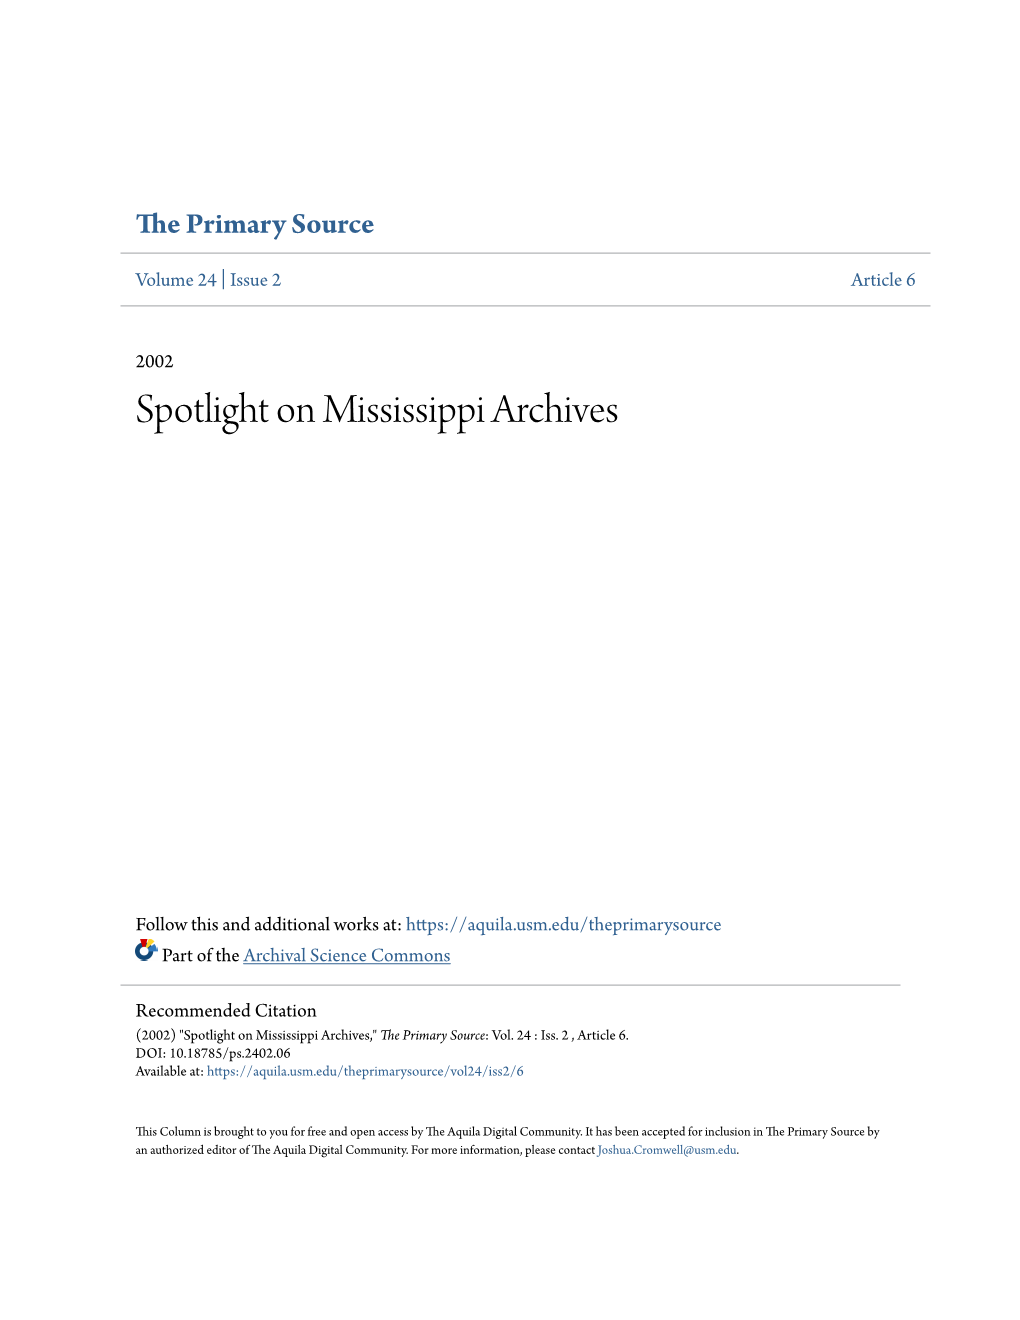 Spotlight on Mississippi Archives